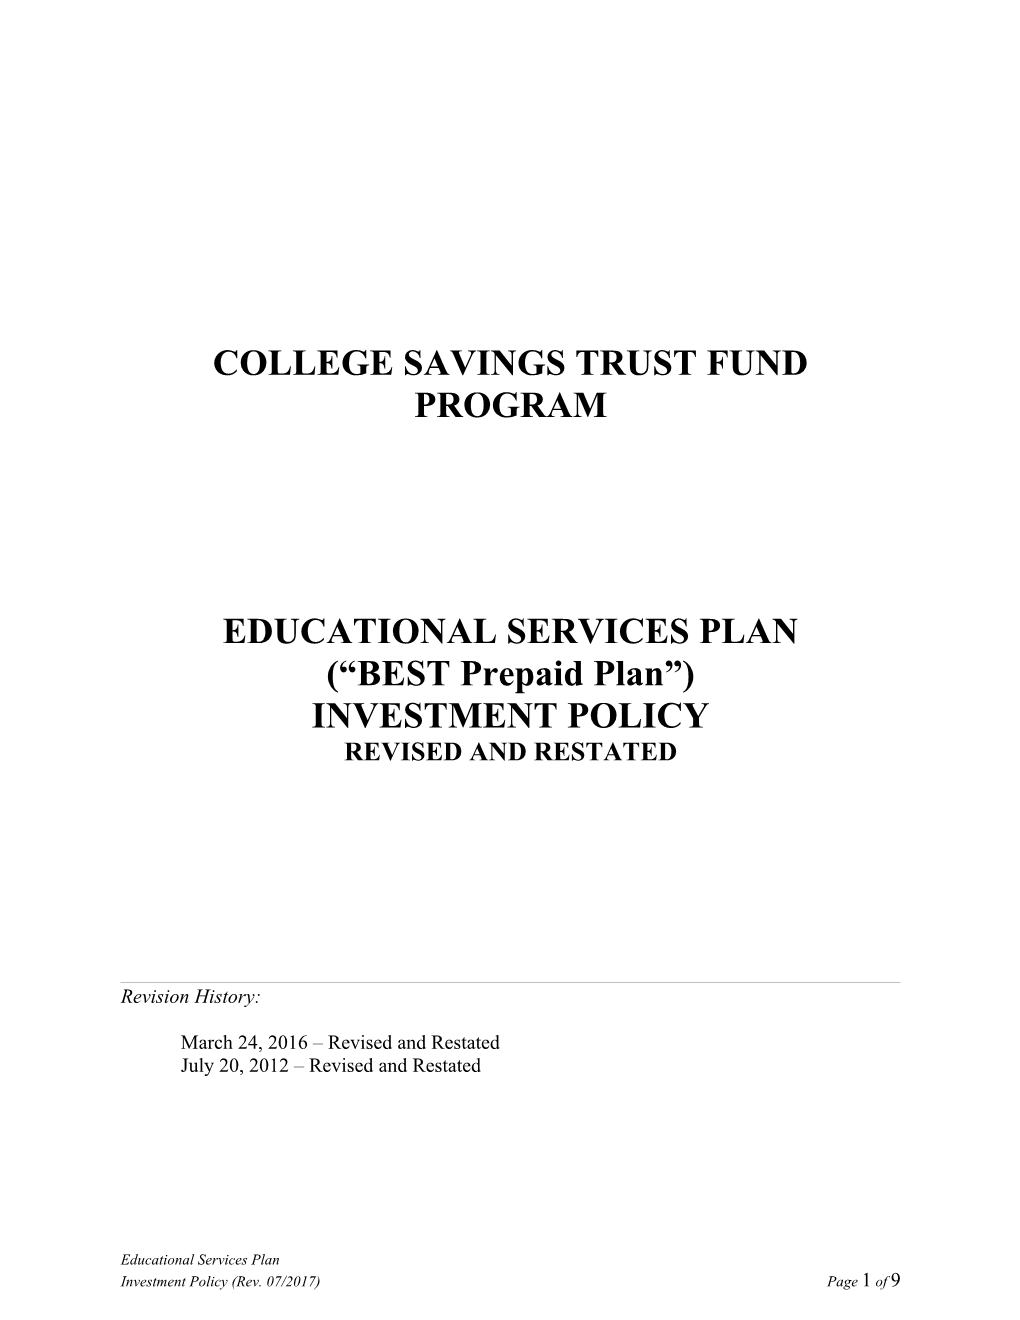 College Savingstrust Fund Program